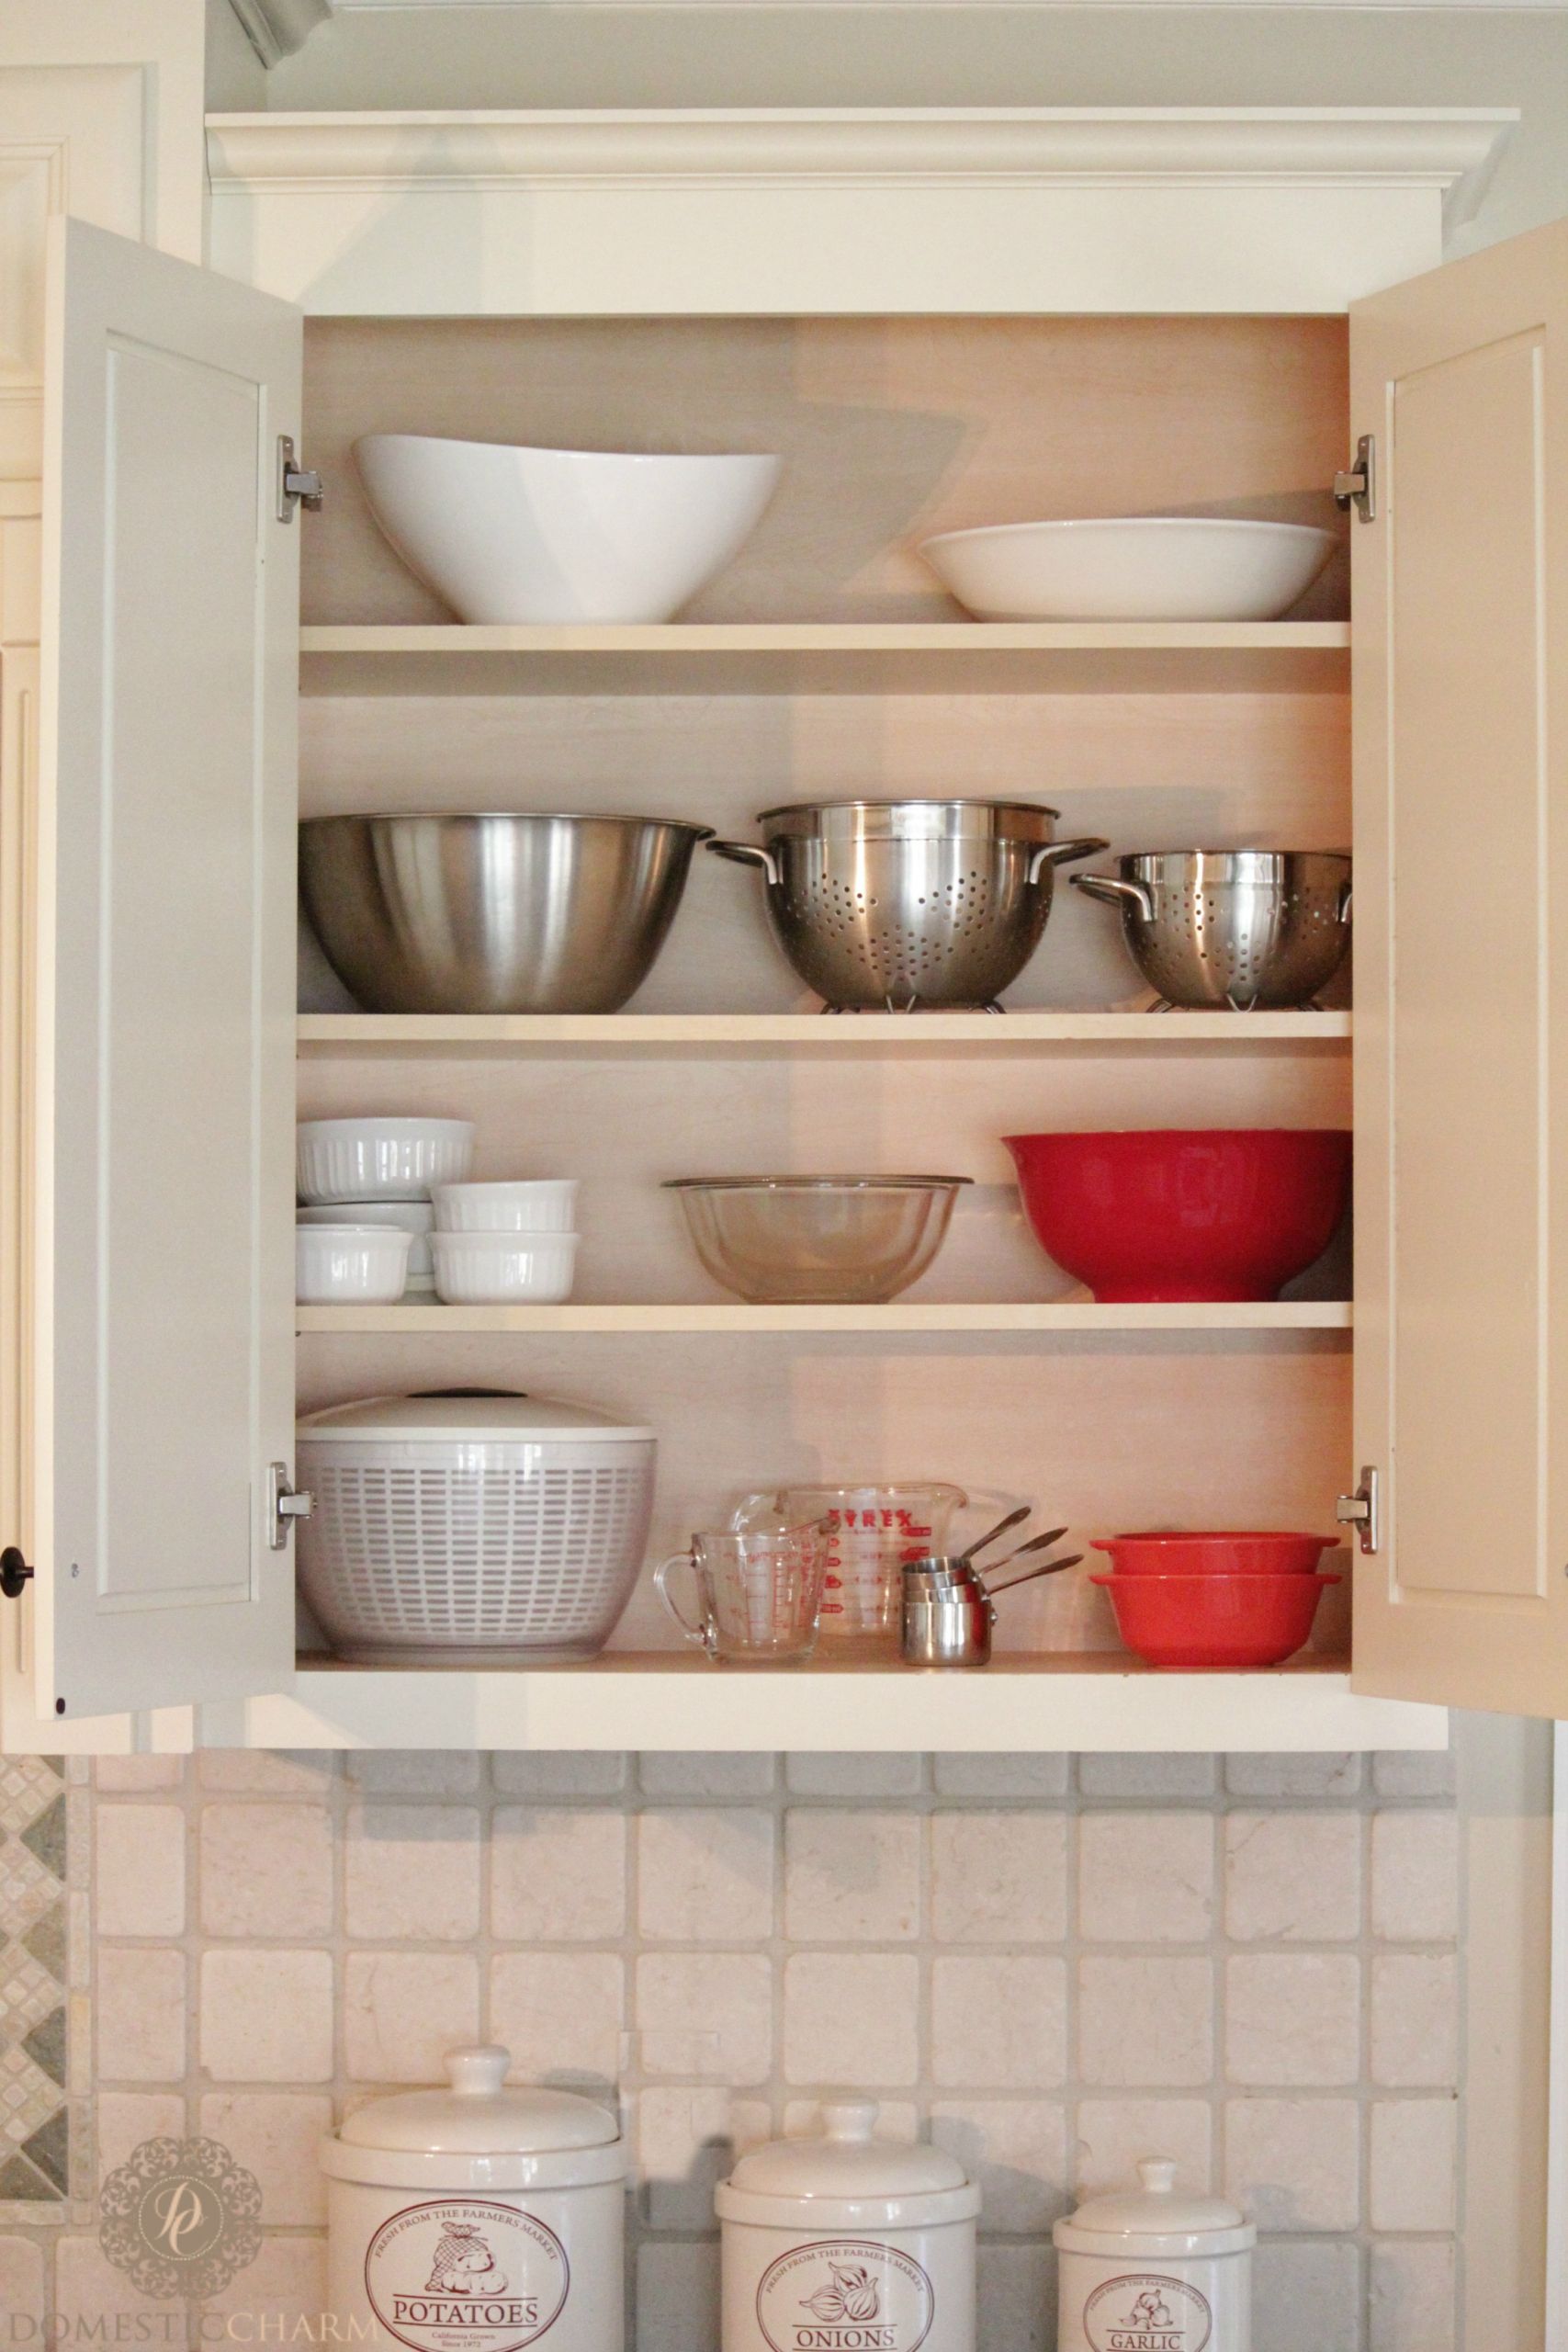 Kitchen Cabinet Organizing
 Organizing Your Kitchen Cabinets Domestic Charm